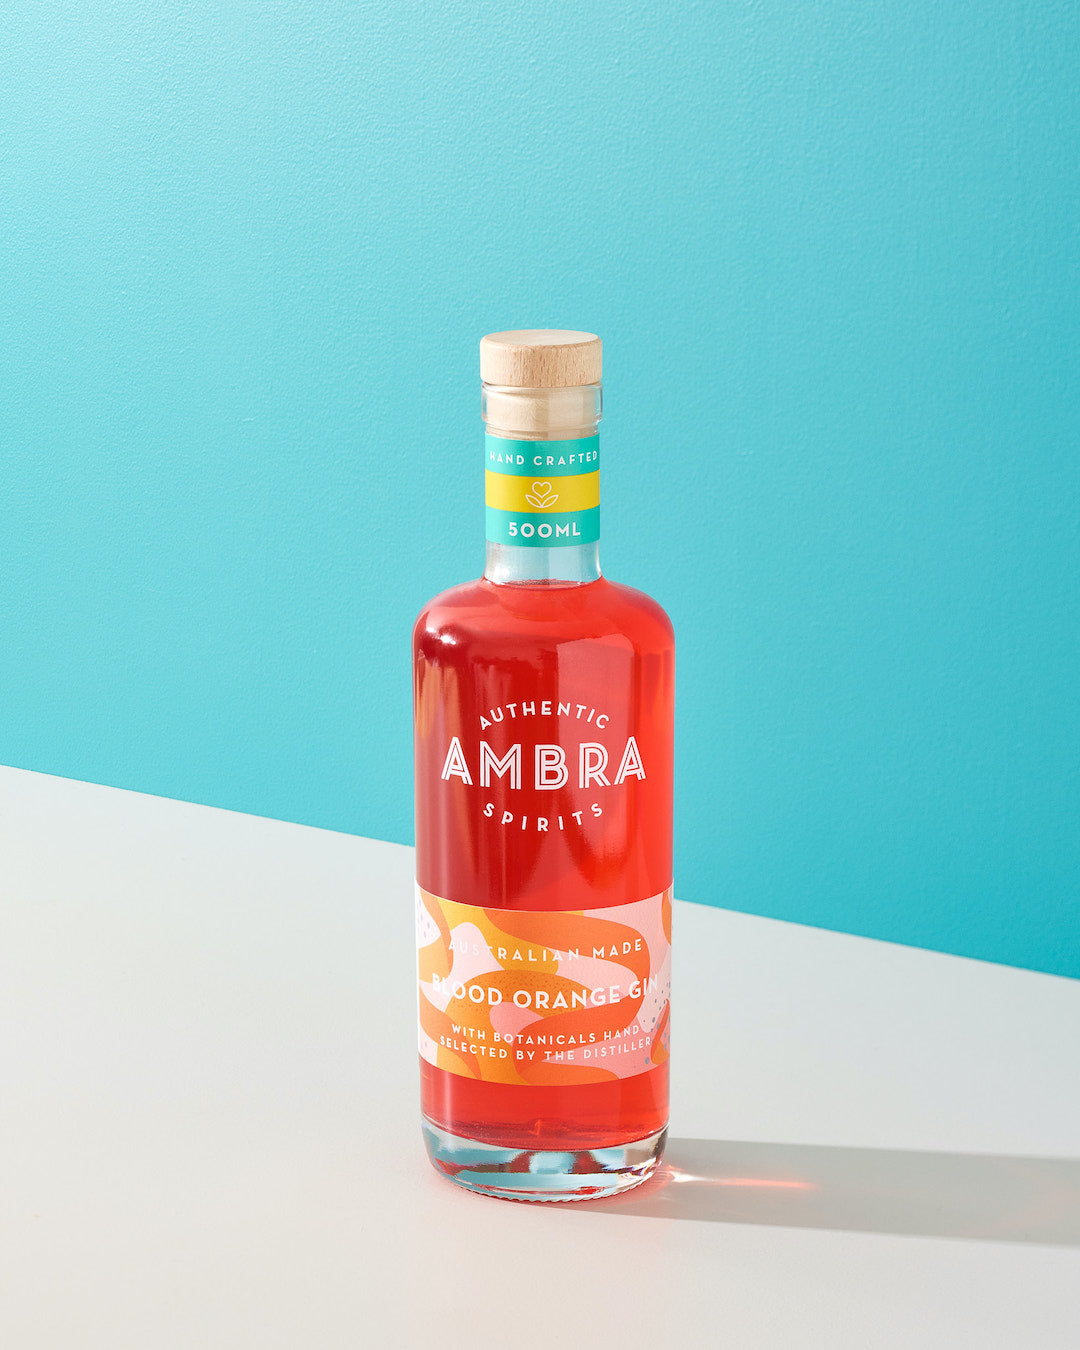 Ambra Blood Orange Gin 500ml